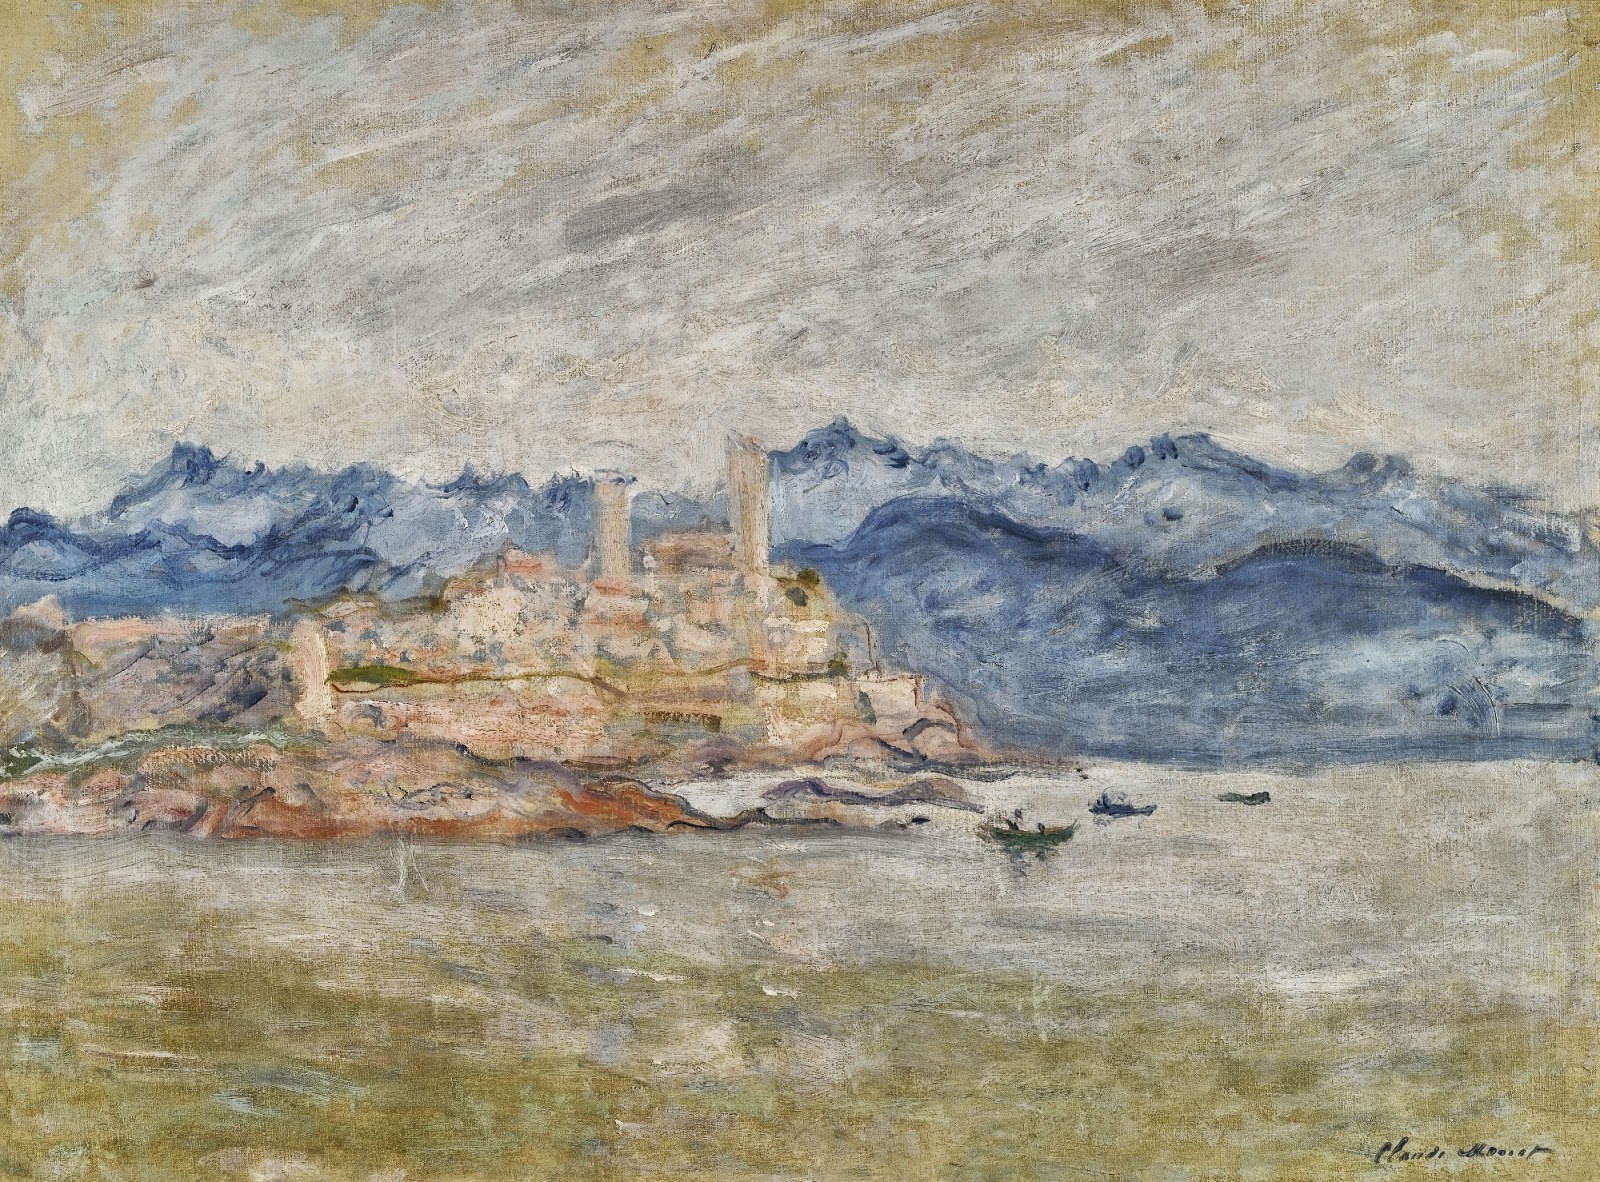 Claude+Monet-1840-1926 (505).jpg